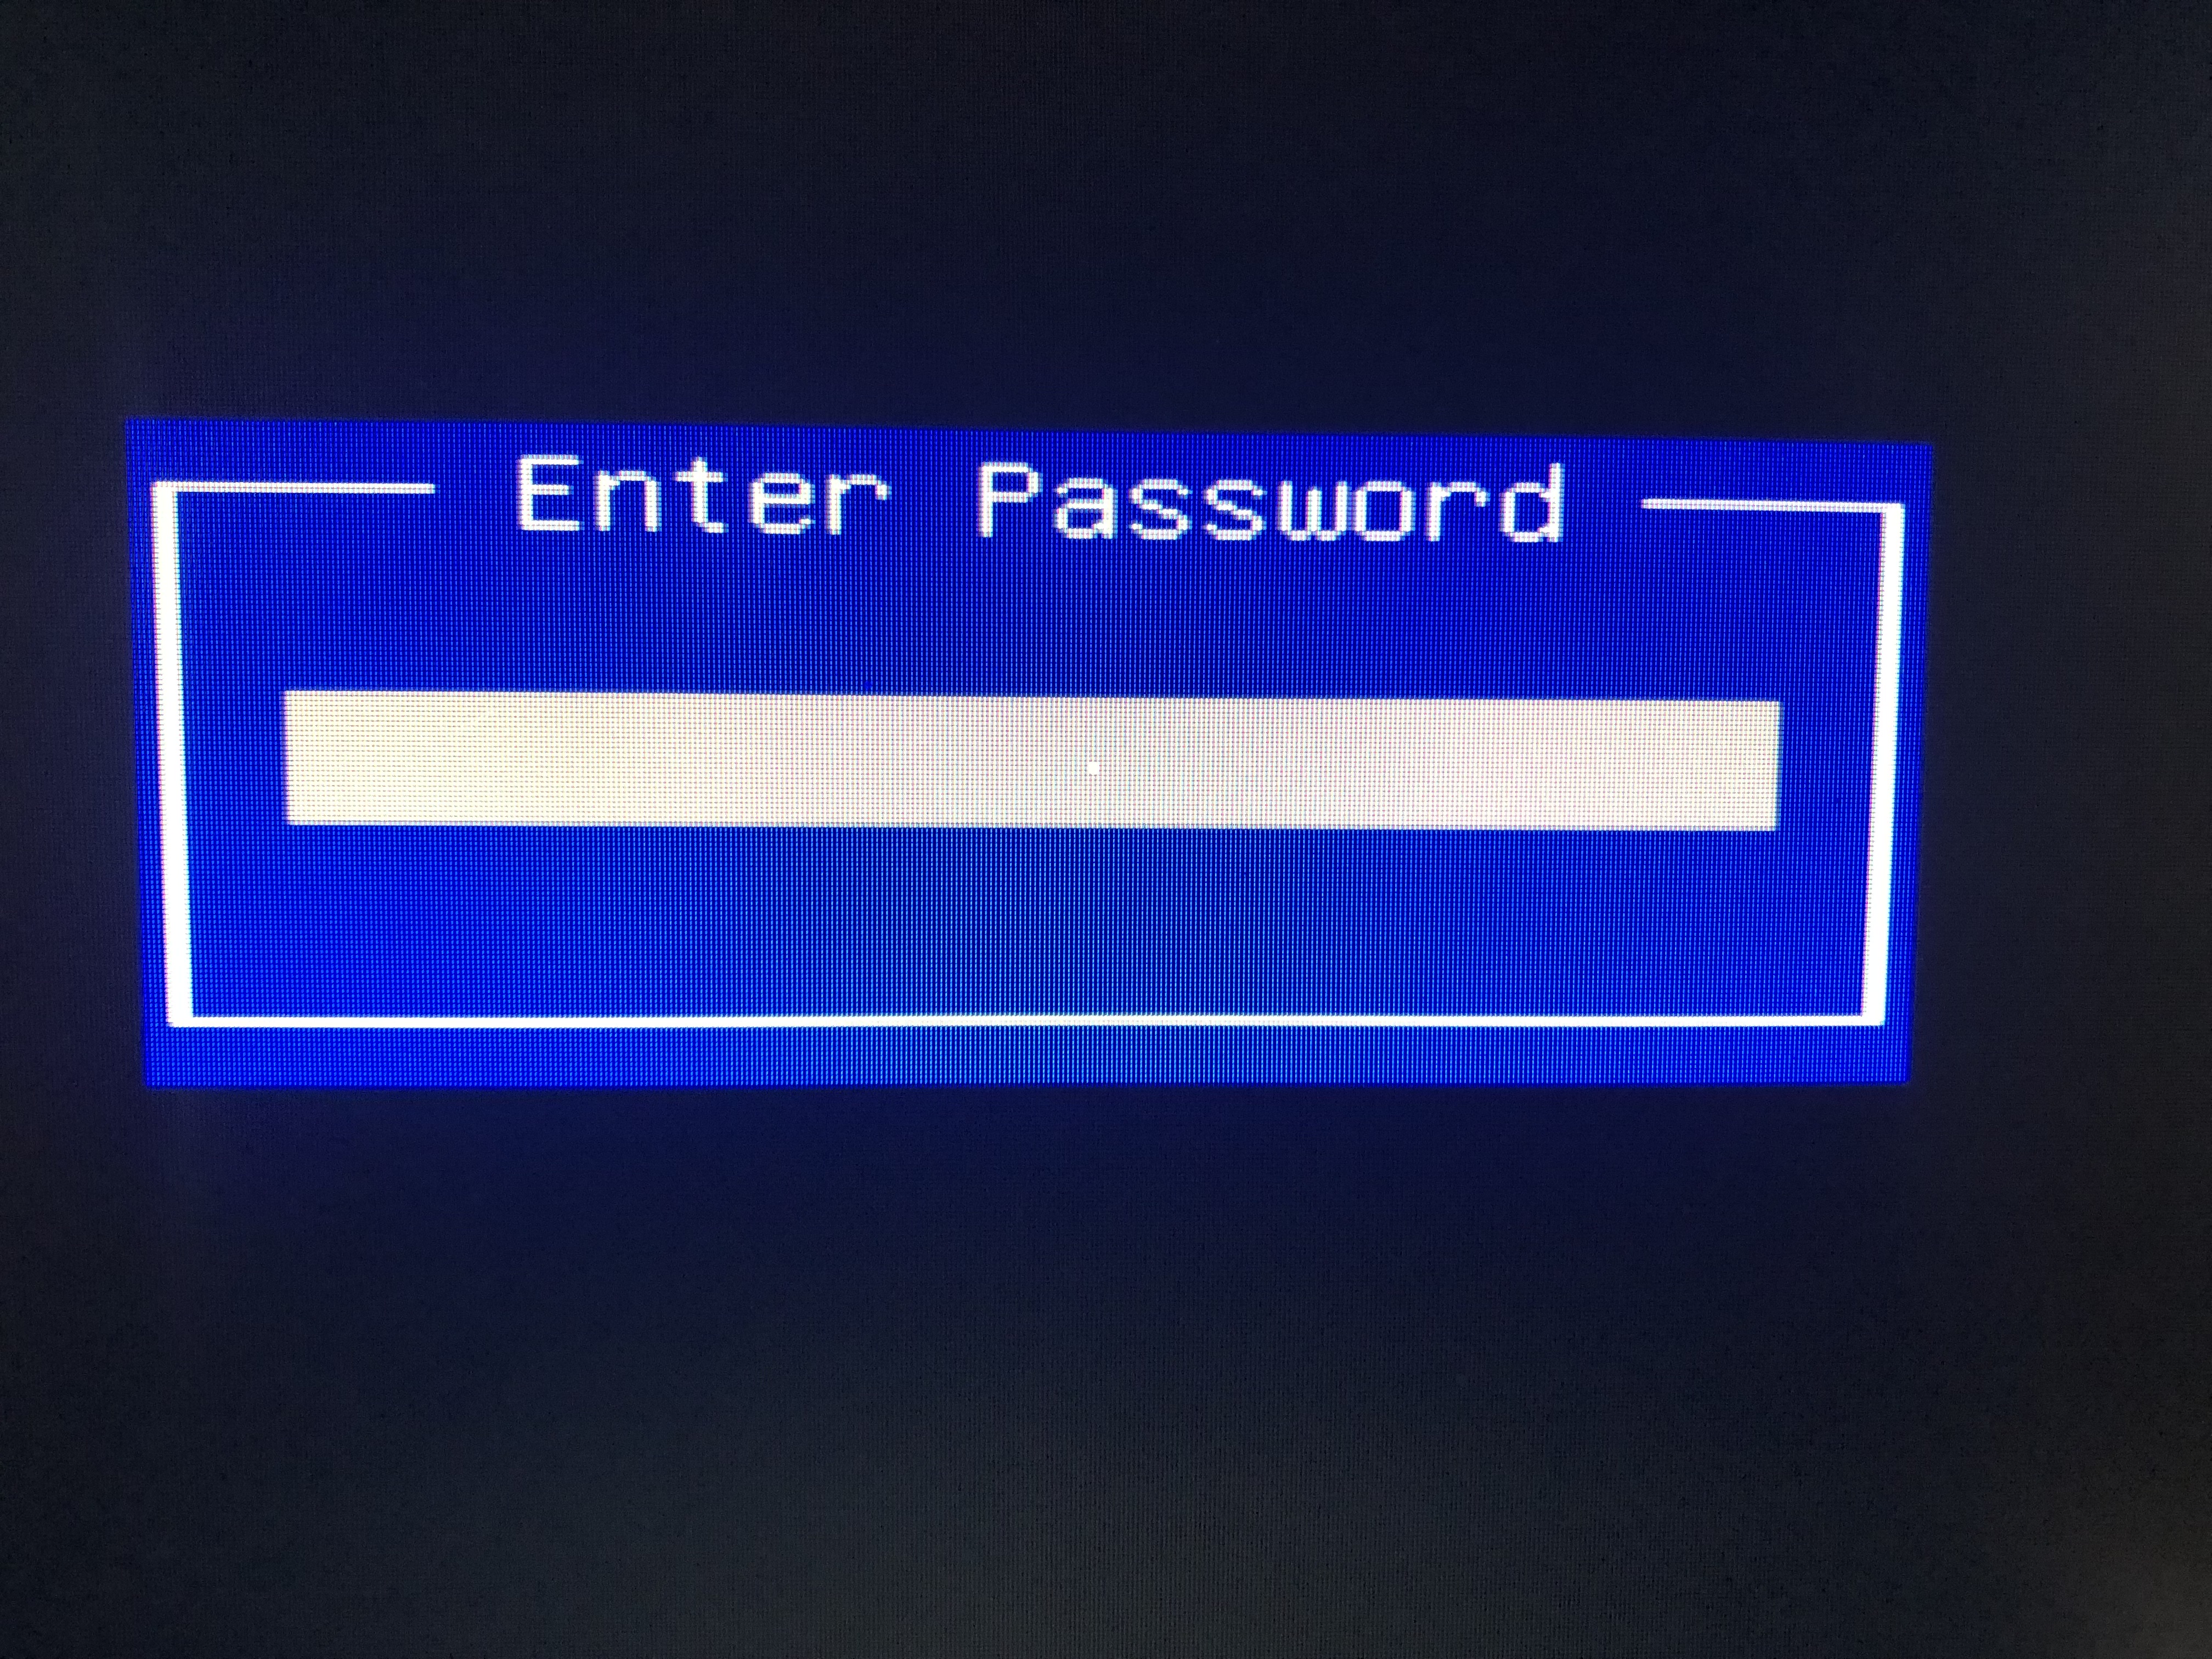 Enter password again. Биос enter password. Пароль enter password. Окно enter password. Синяя табличка на компьютере.